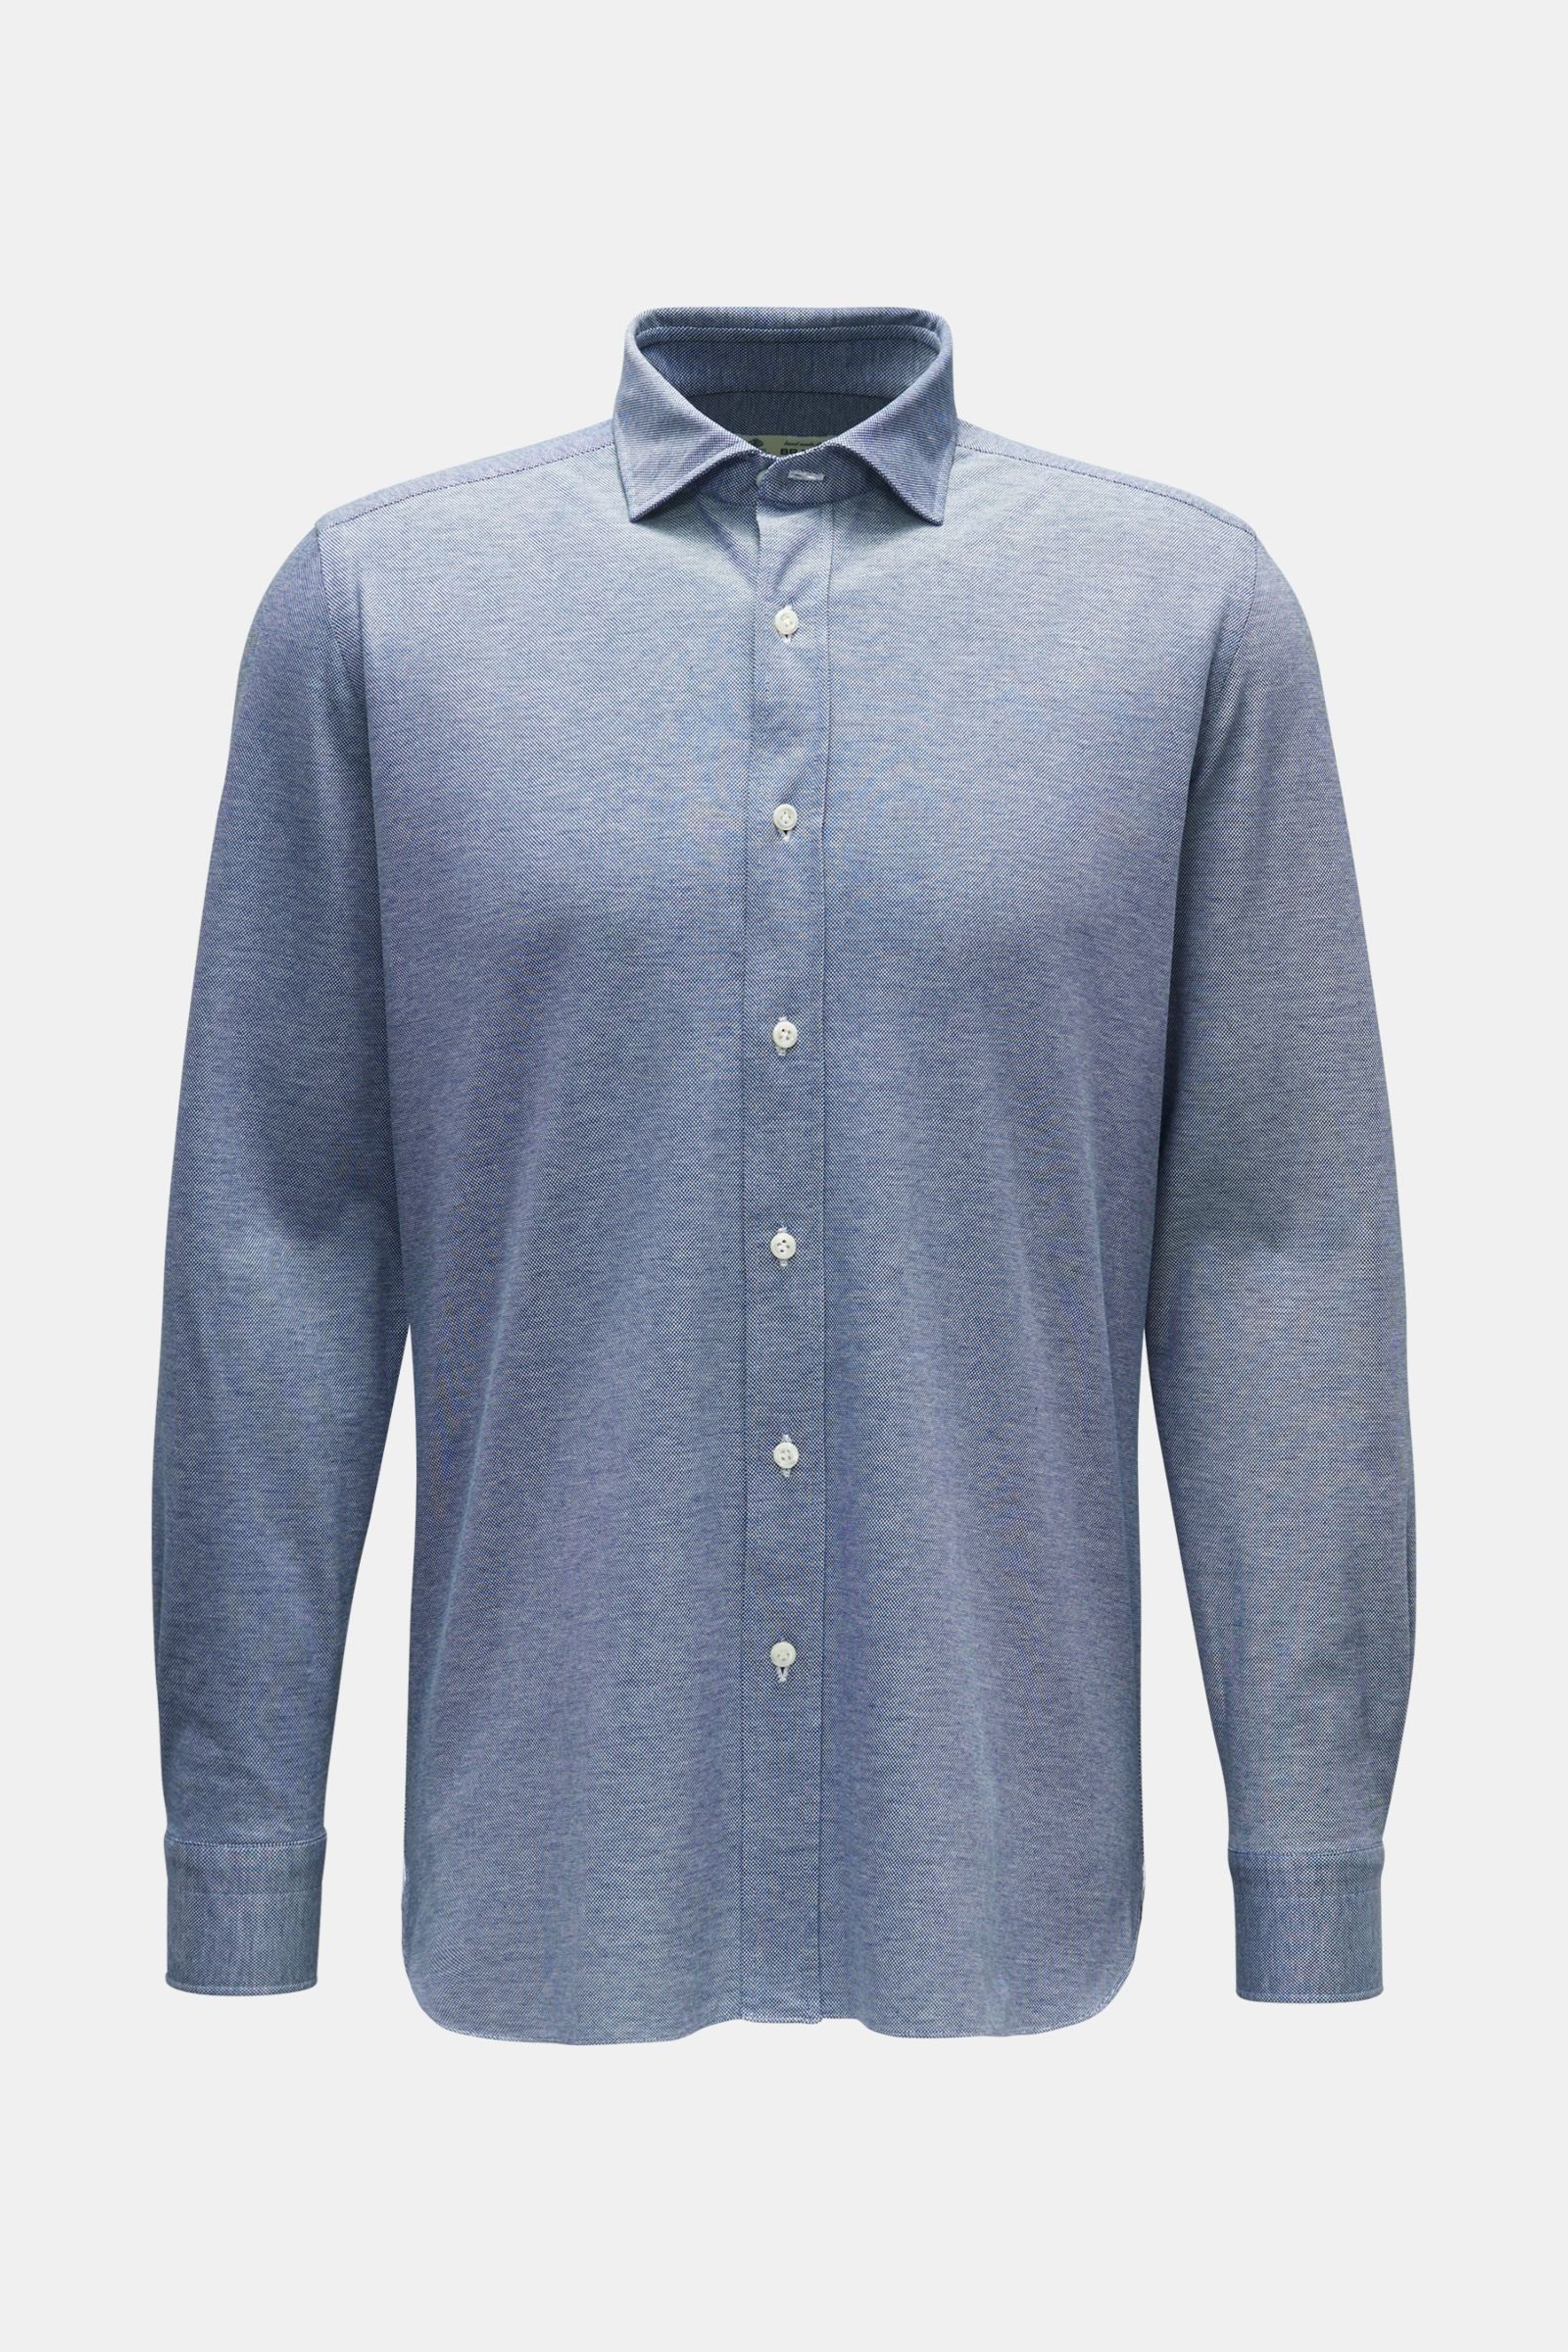 Jersey shirt 'Capri' shark collar grey-blue